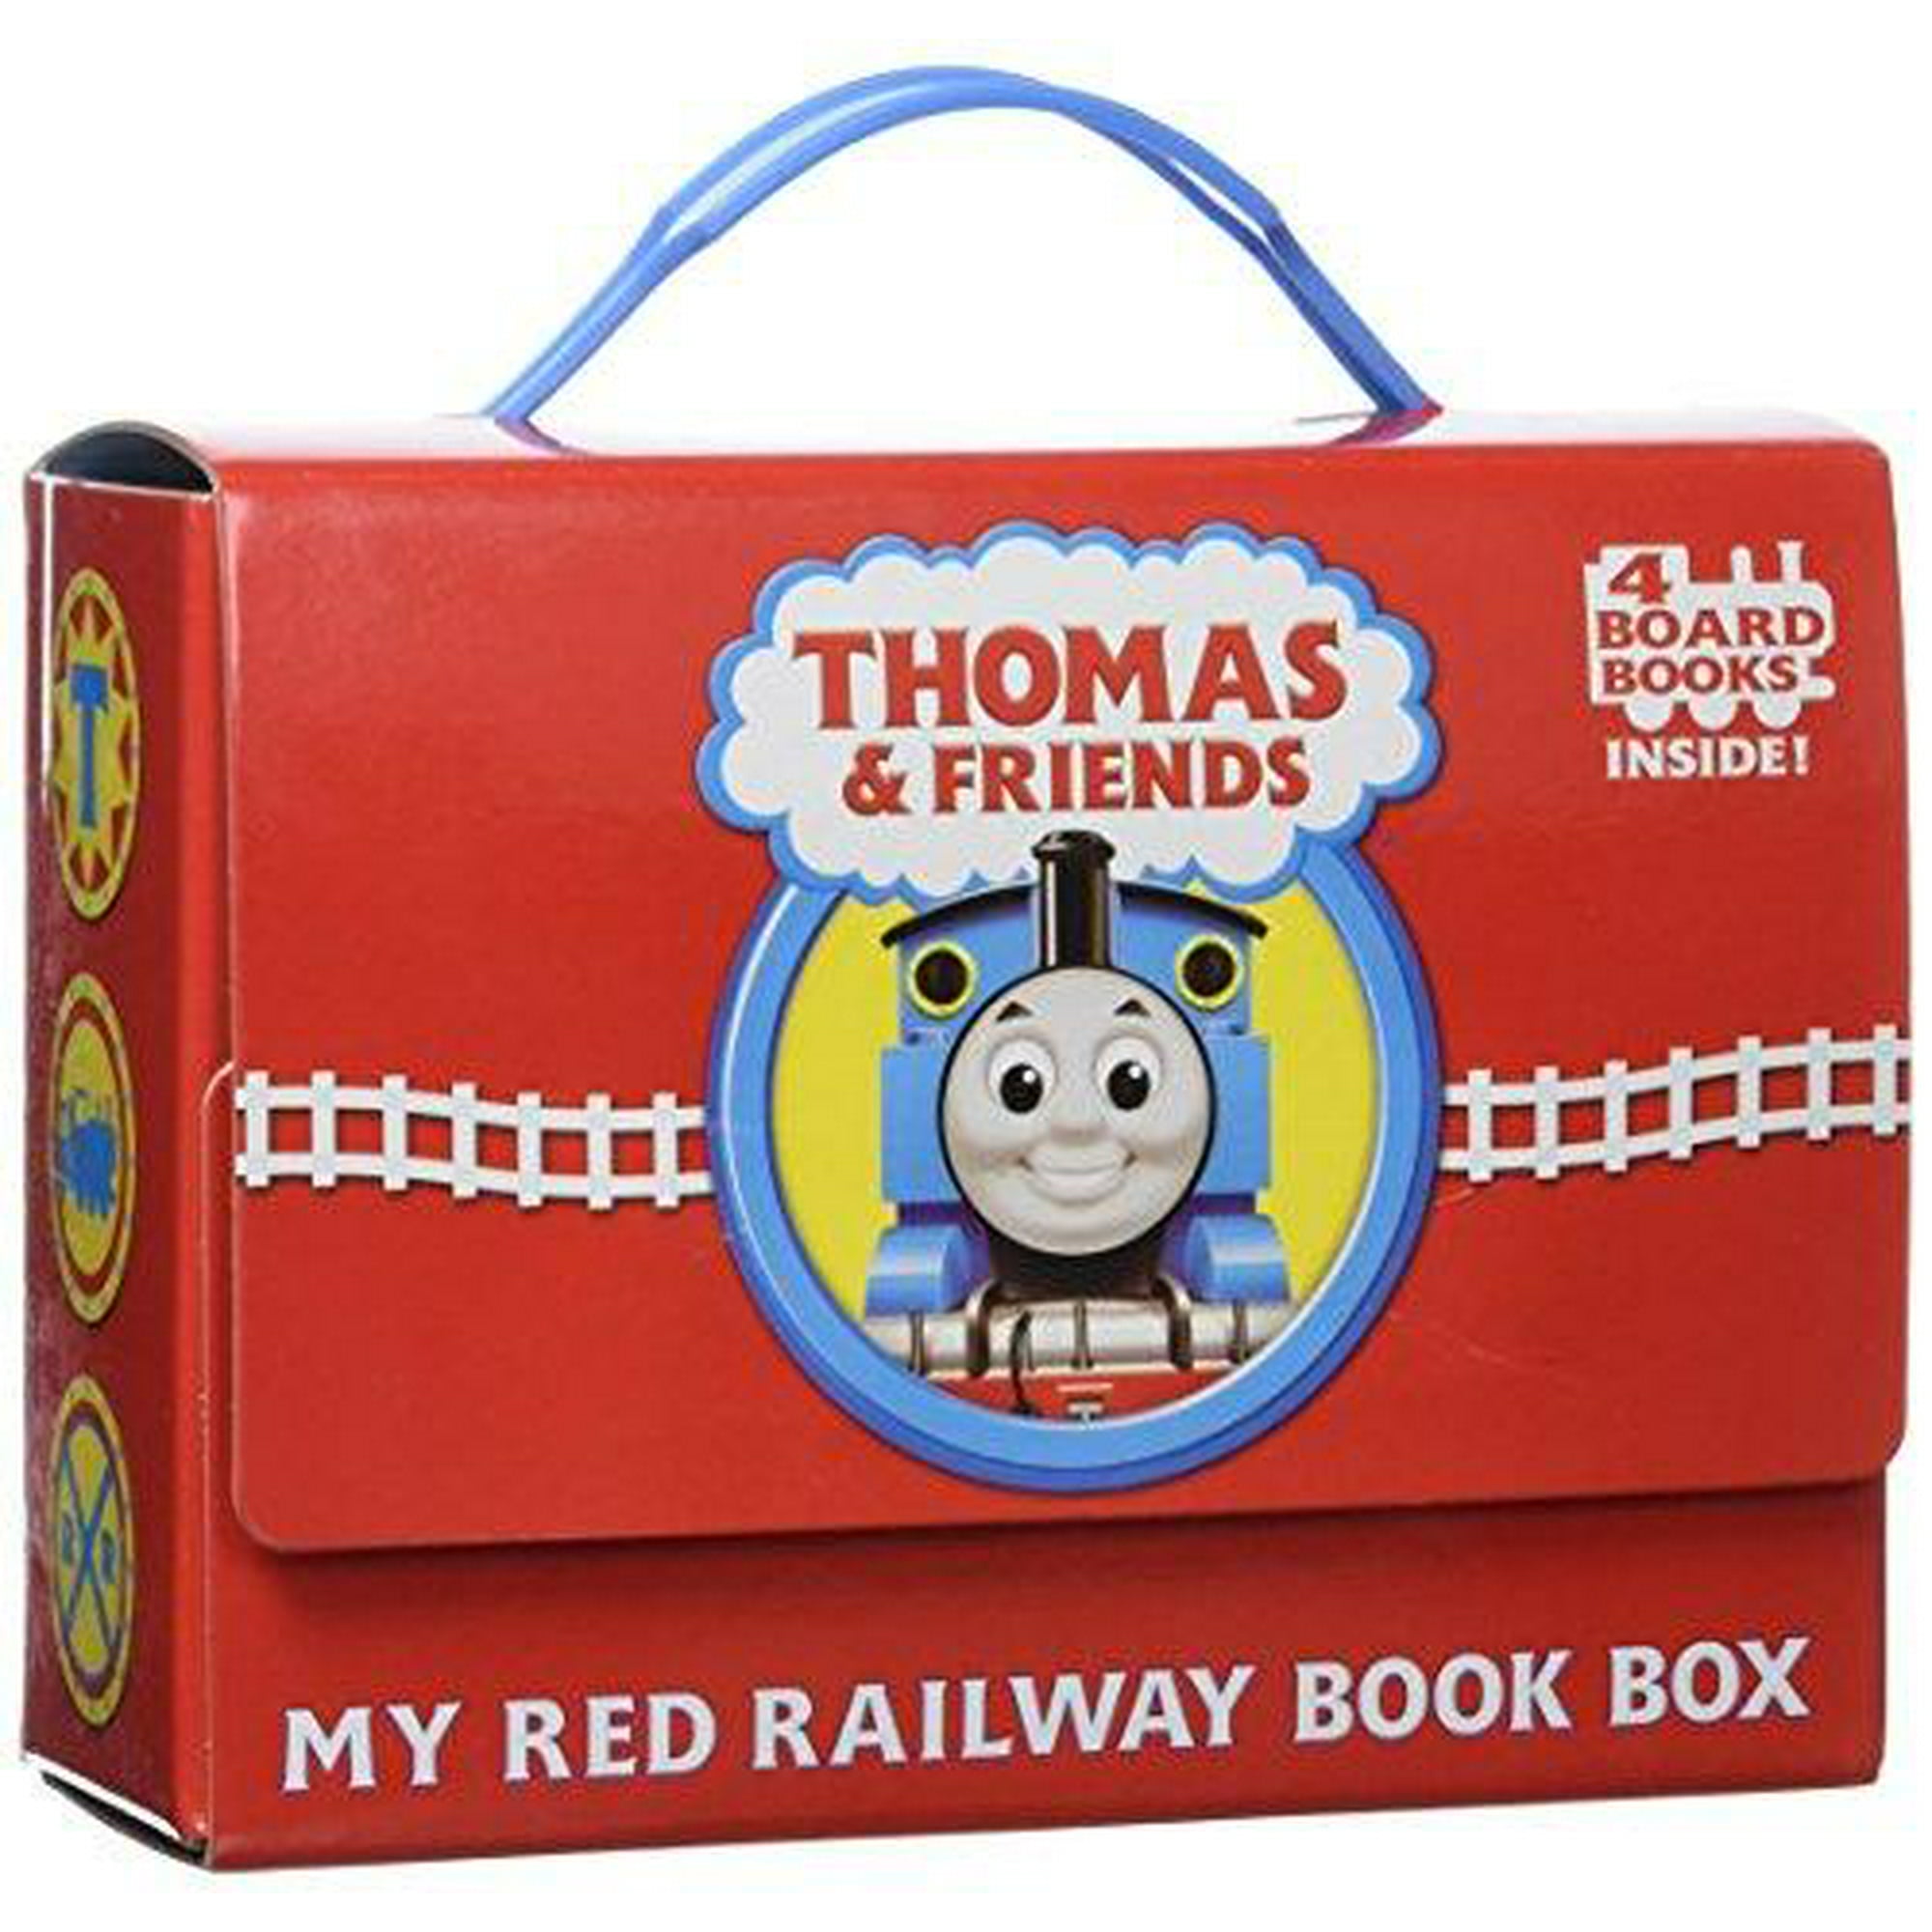 Tom's box